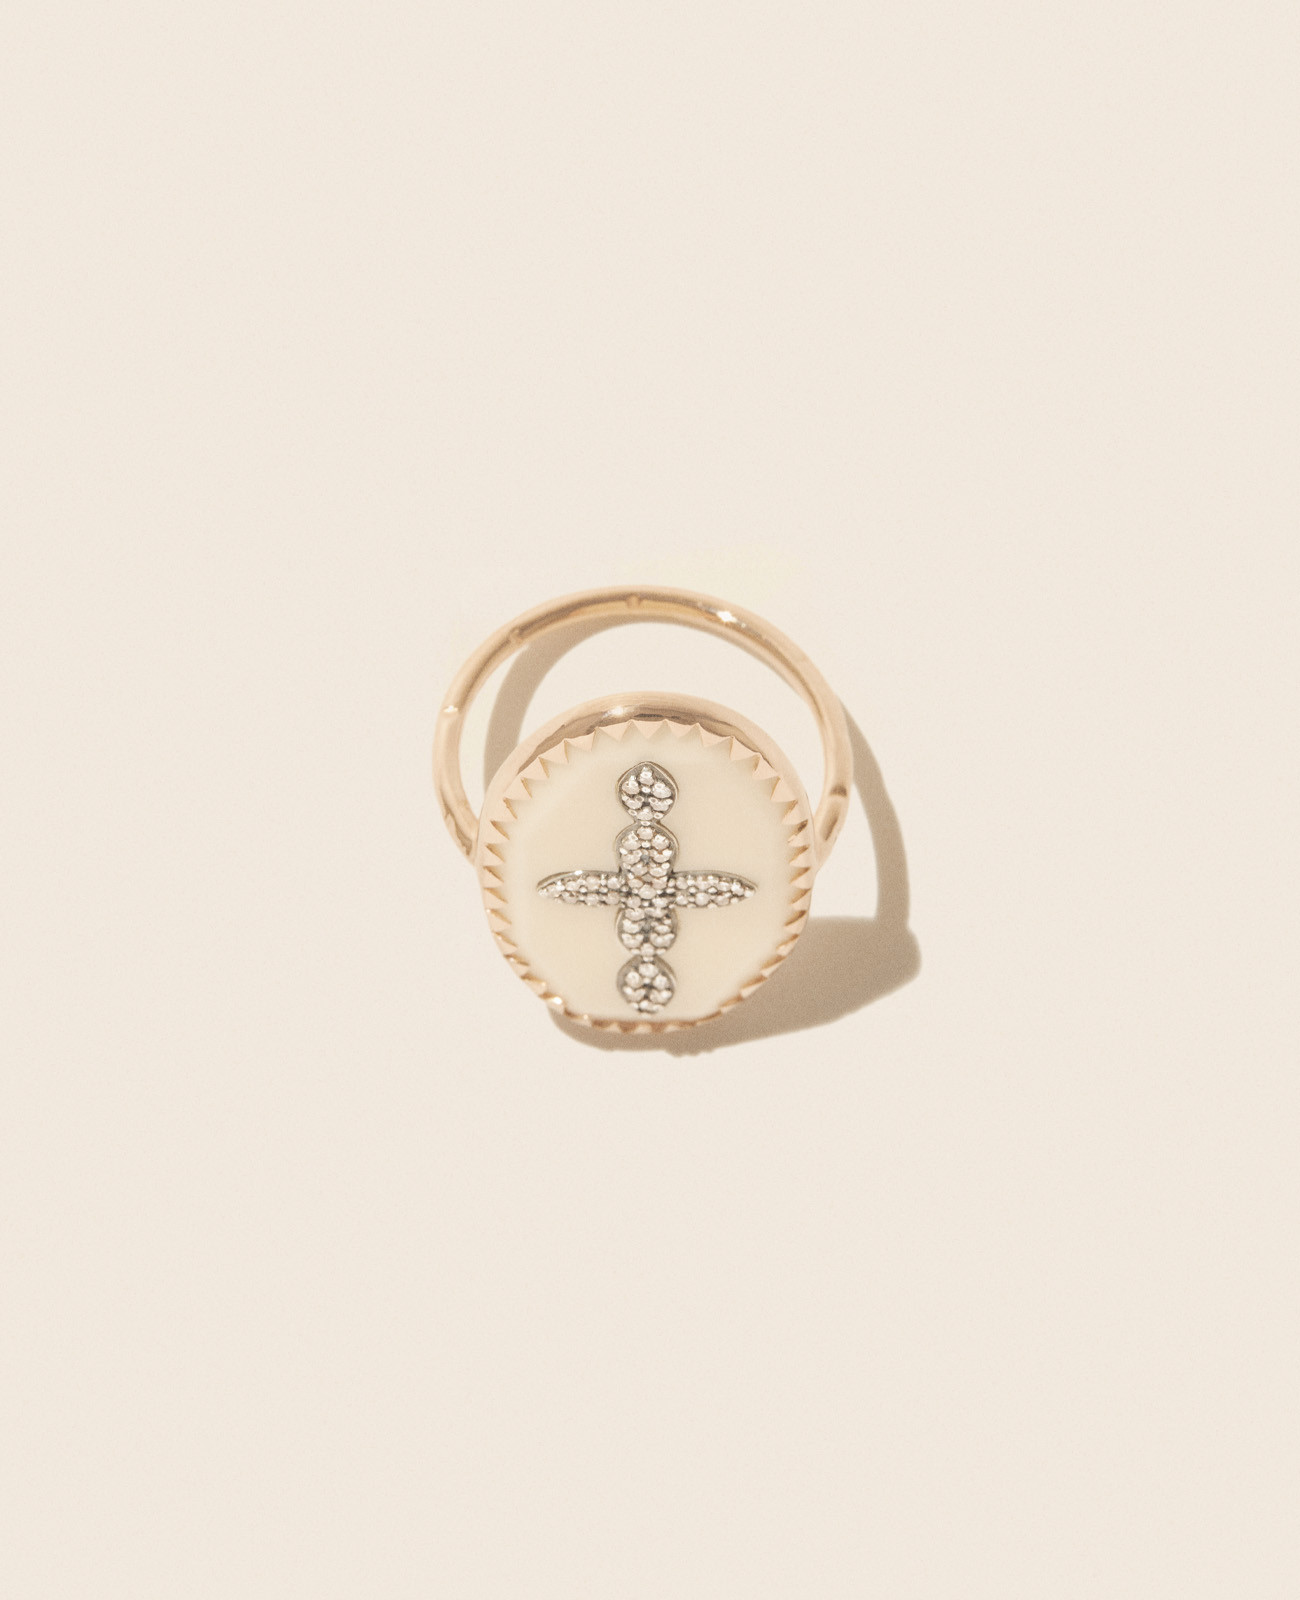 BOWIE N°3 WHITE DIAMOND ring pascale monvoisin jewelry paris